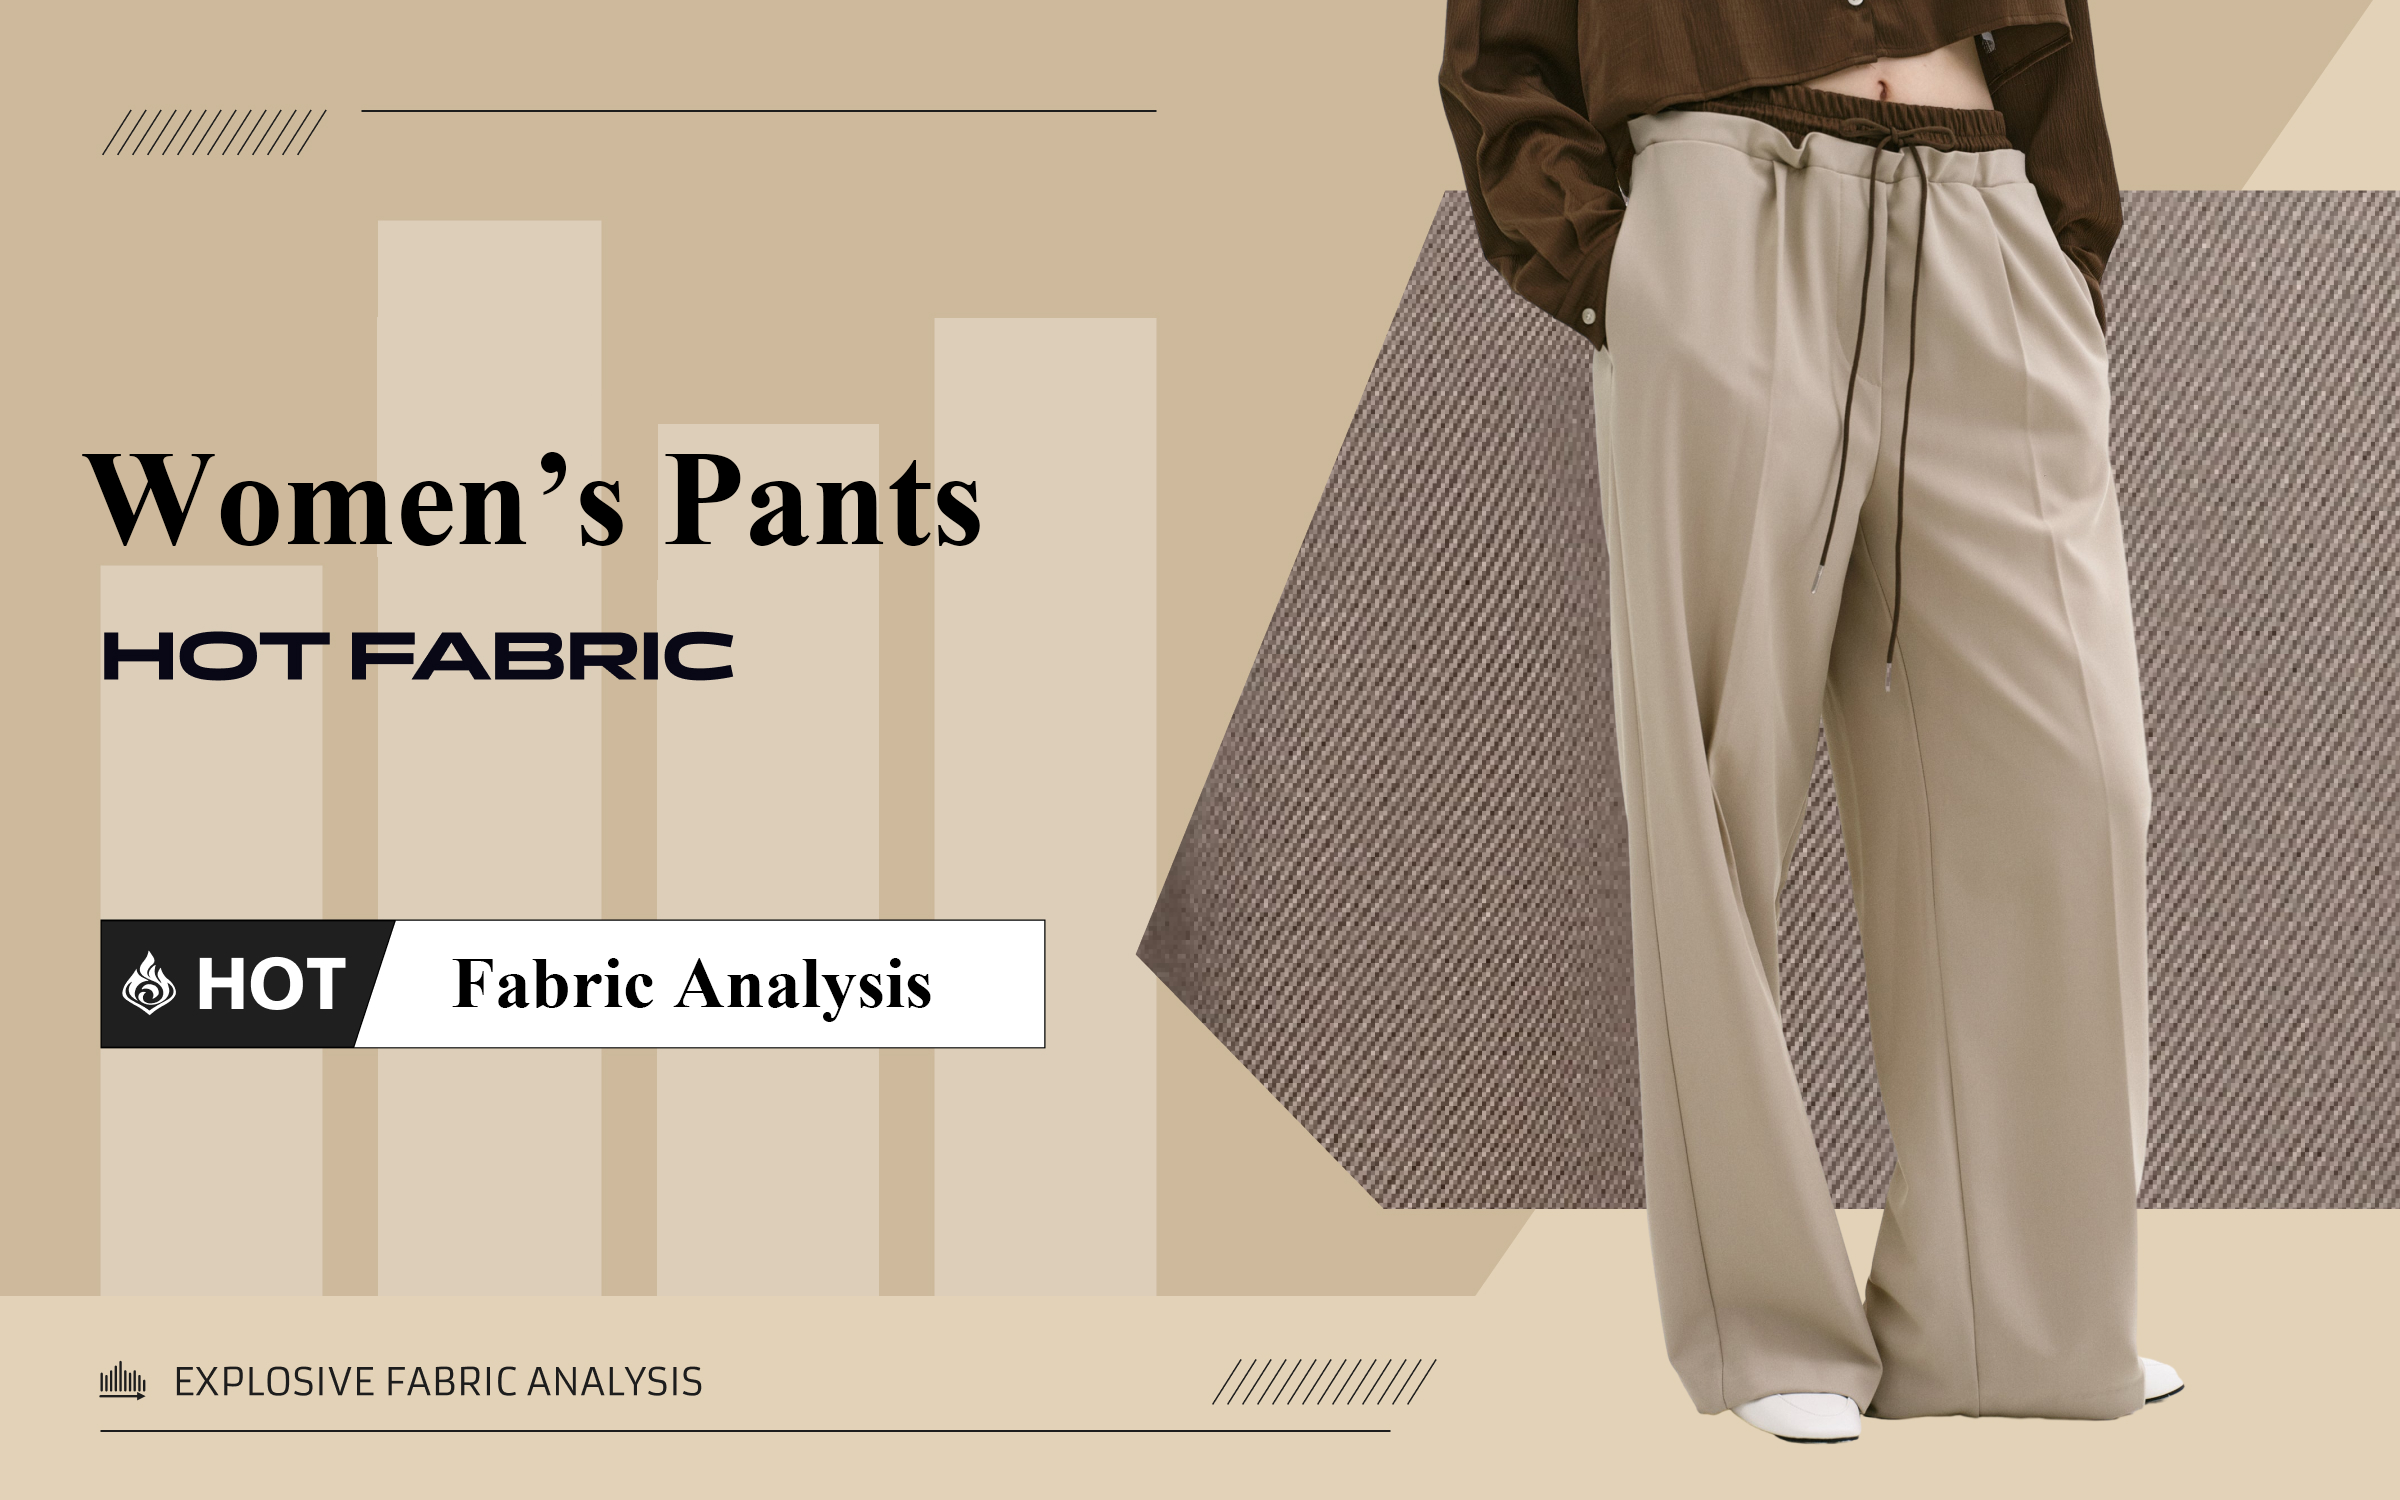 Pants Fabric -- The TOP Ranking of Womenswear